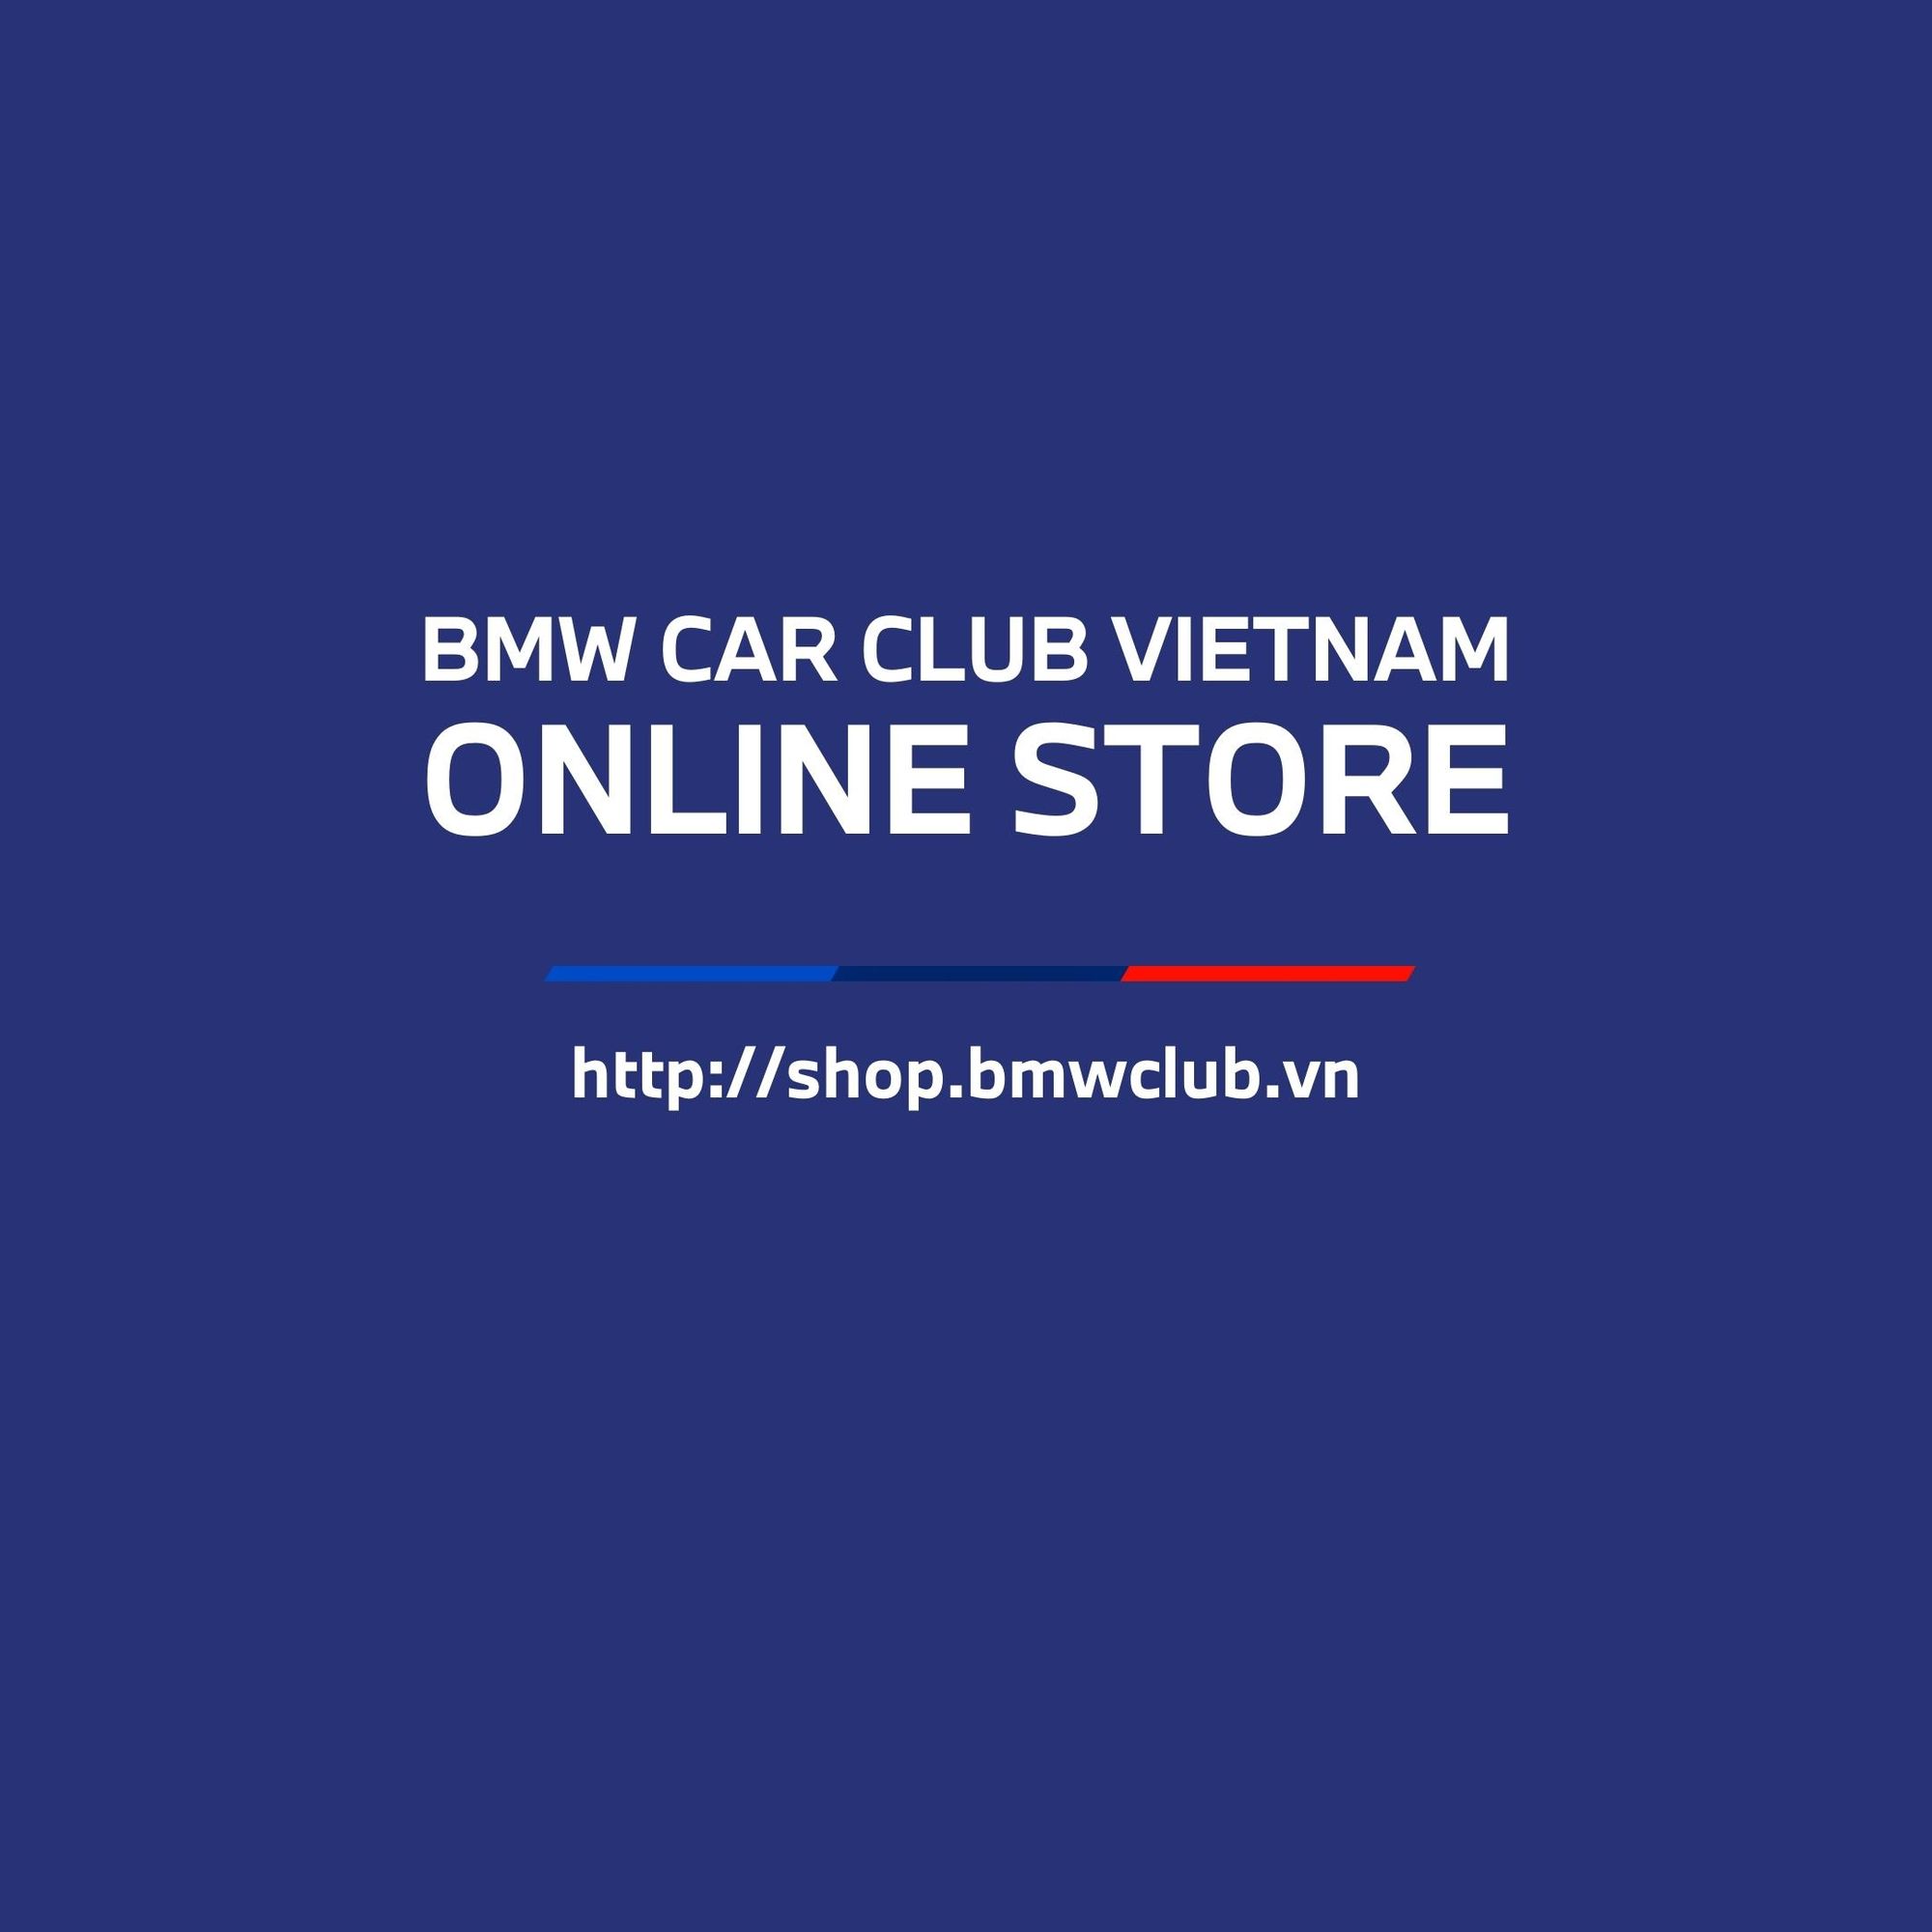 Ra mắt Online Store của BMW Car Club Vietnam